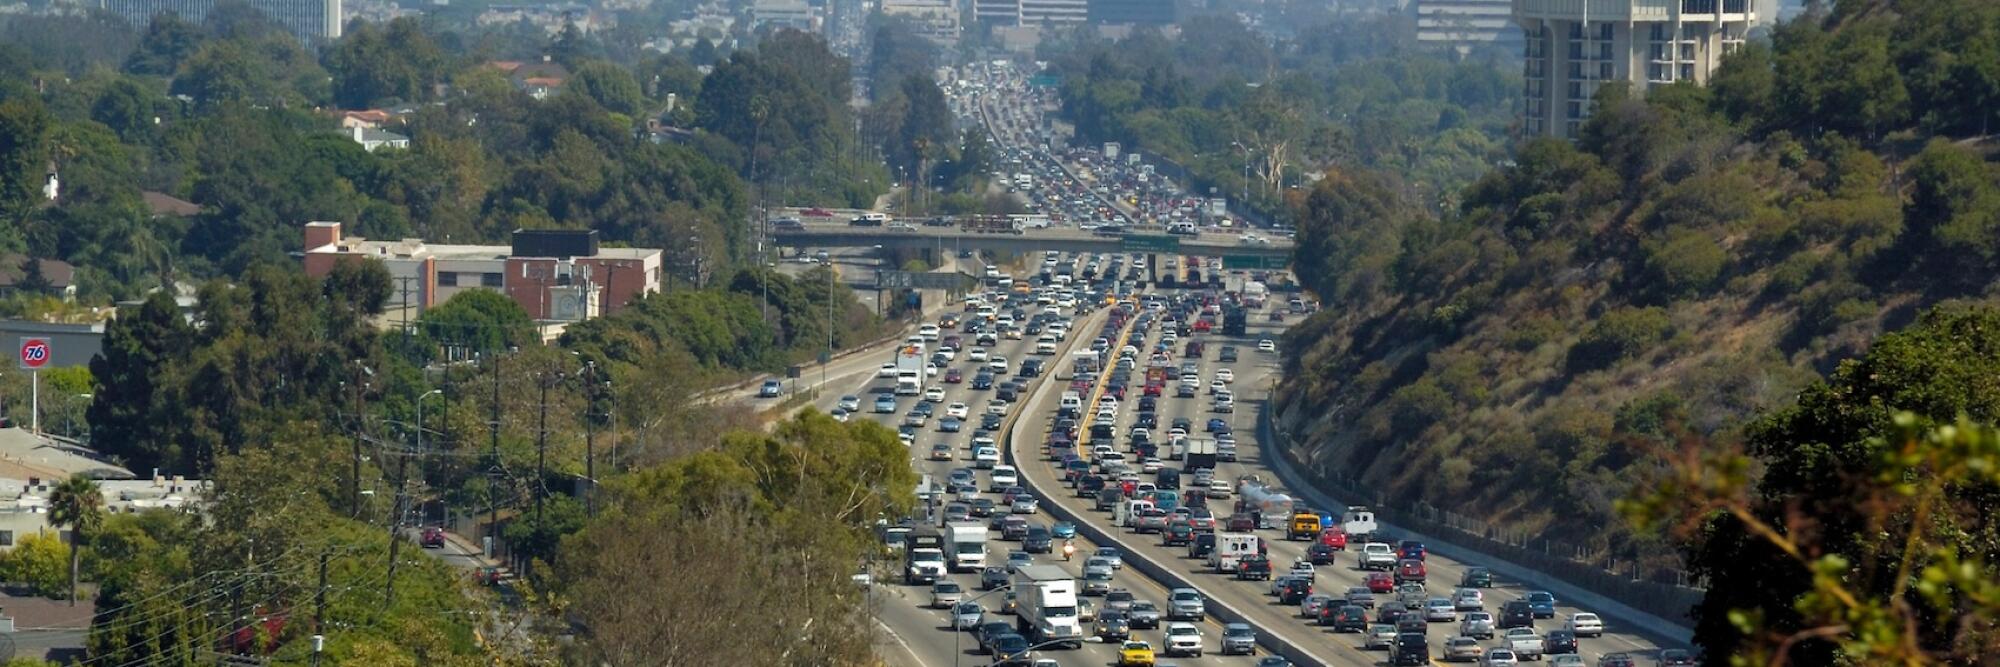 Traffic Los Angeles 405